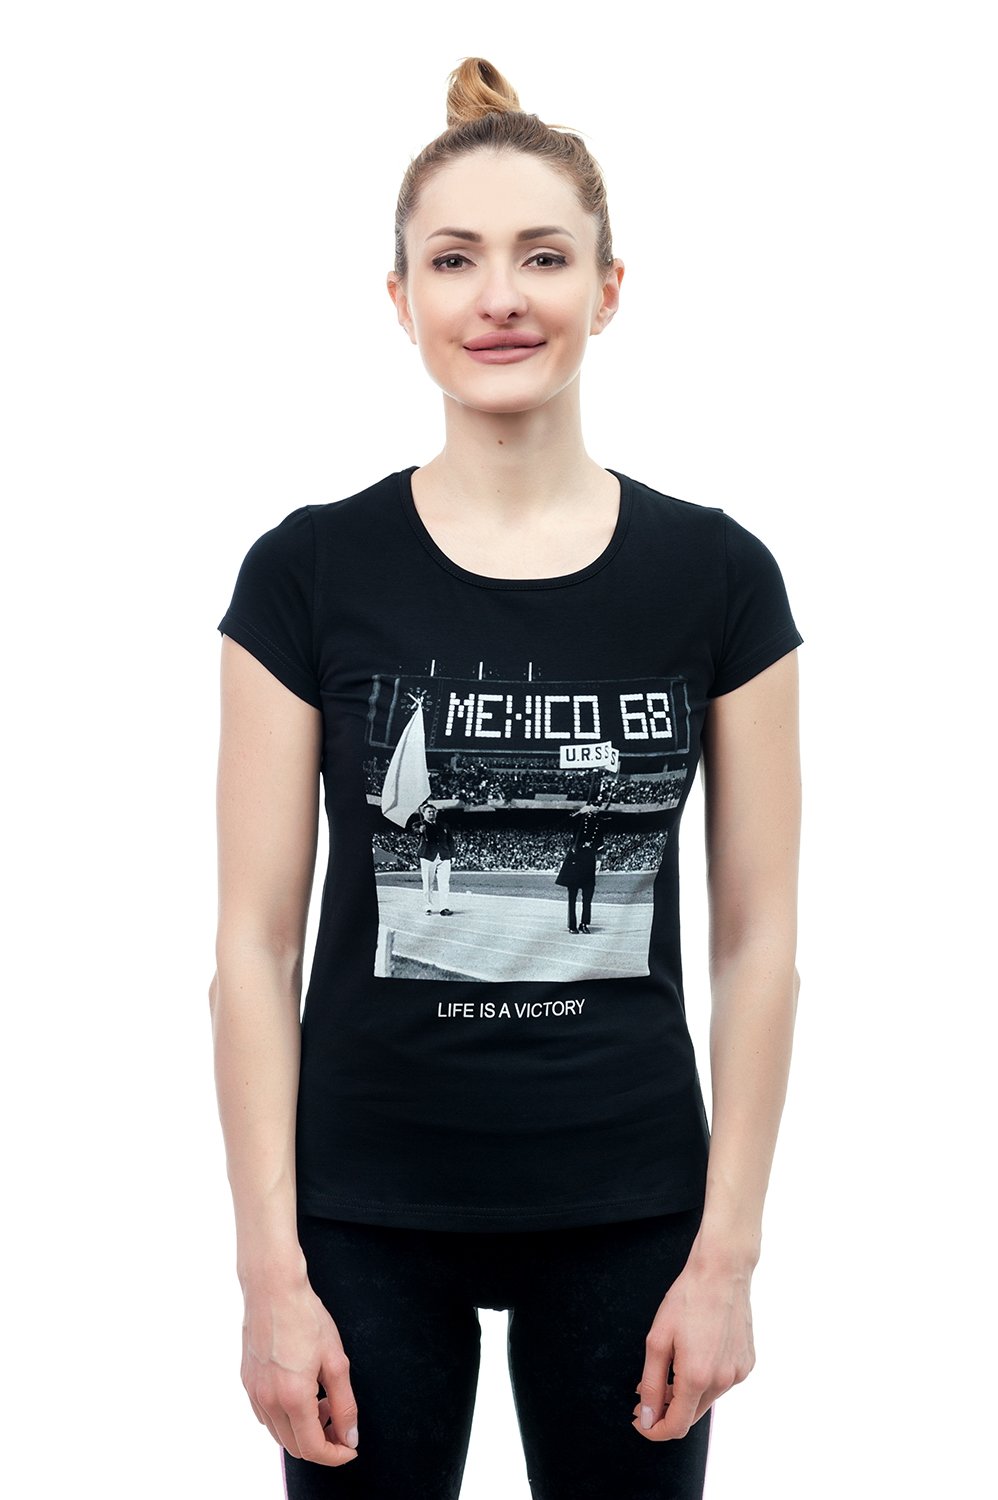 Women's T-shirt Mexico 68, black, size XS